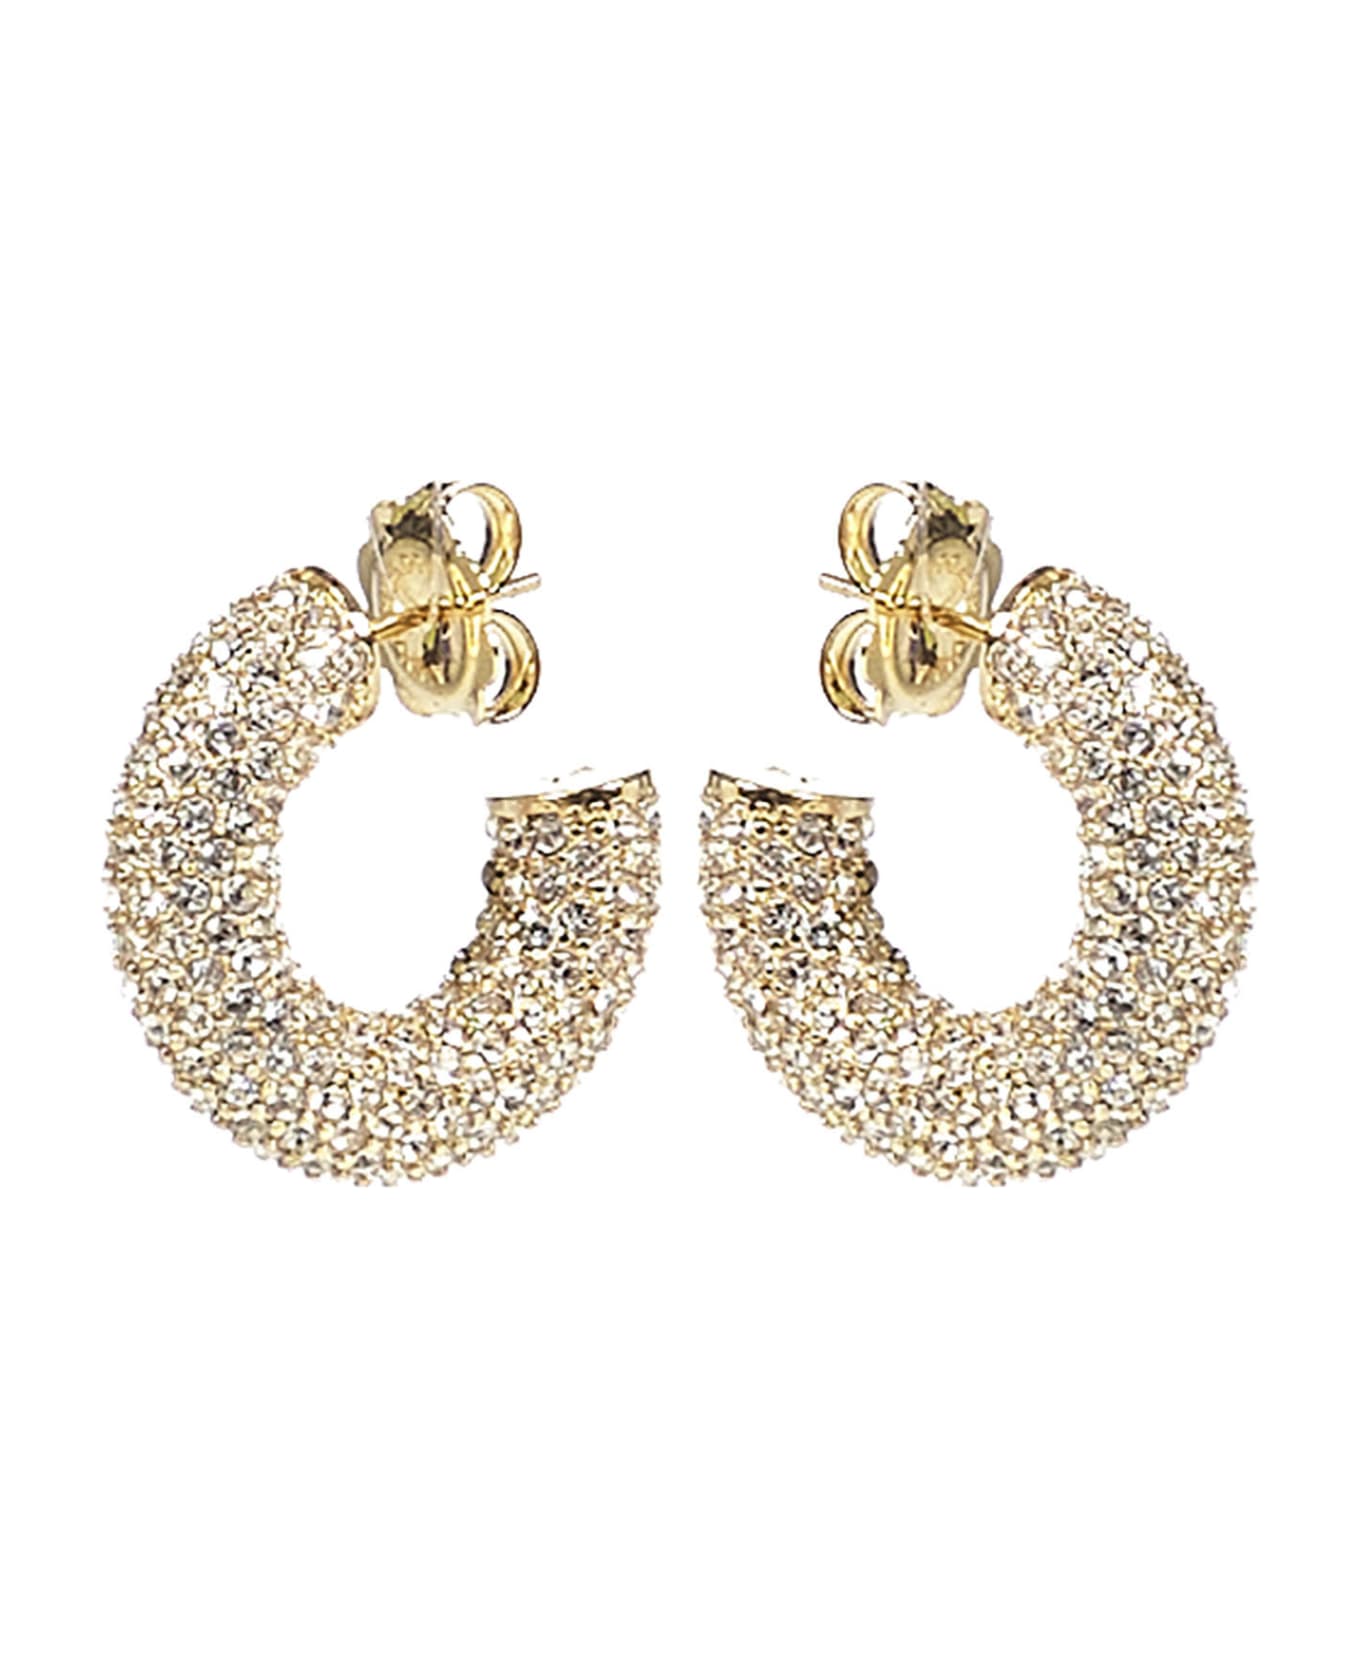 Amina Muaddi Cameron Small Earrings - Golden